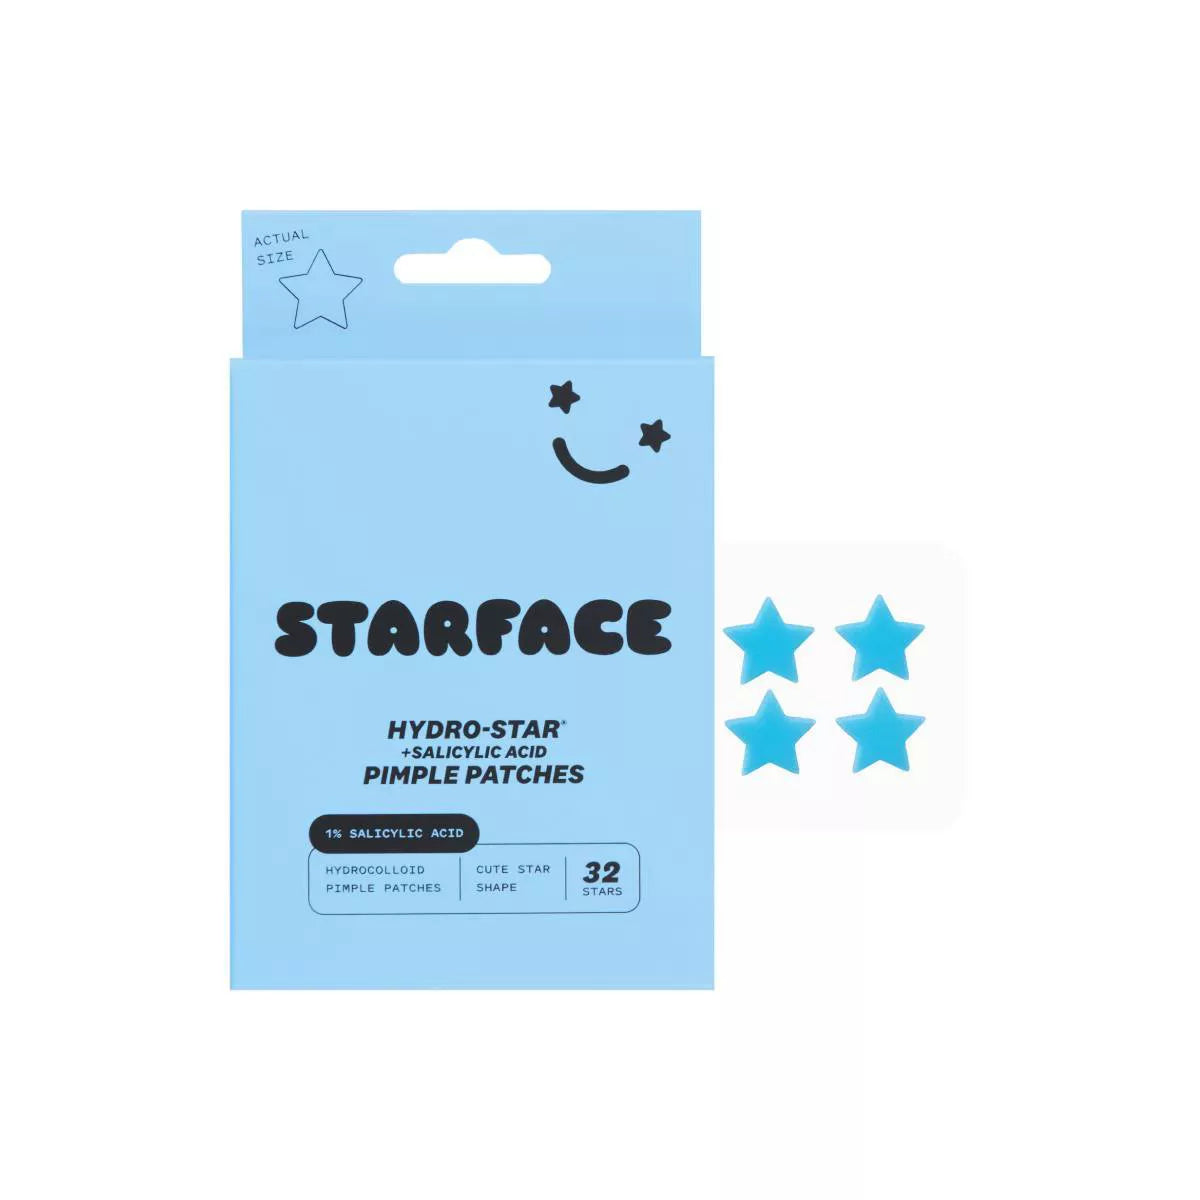 Hydro-star + salicylic acid Starface